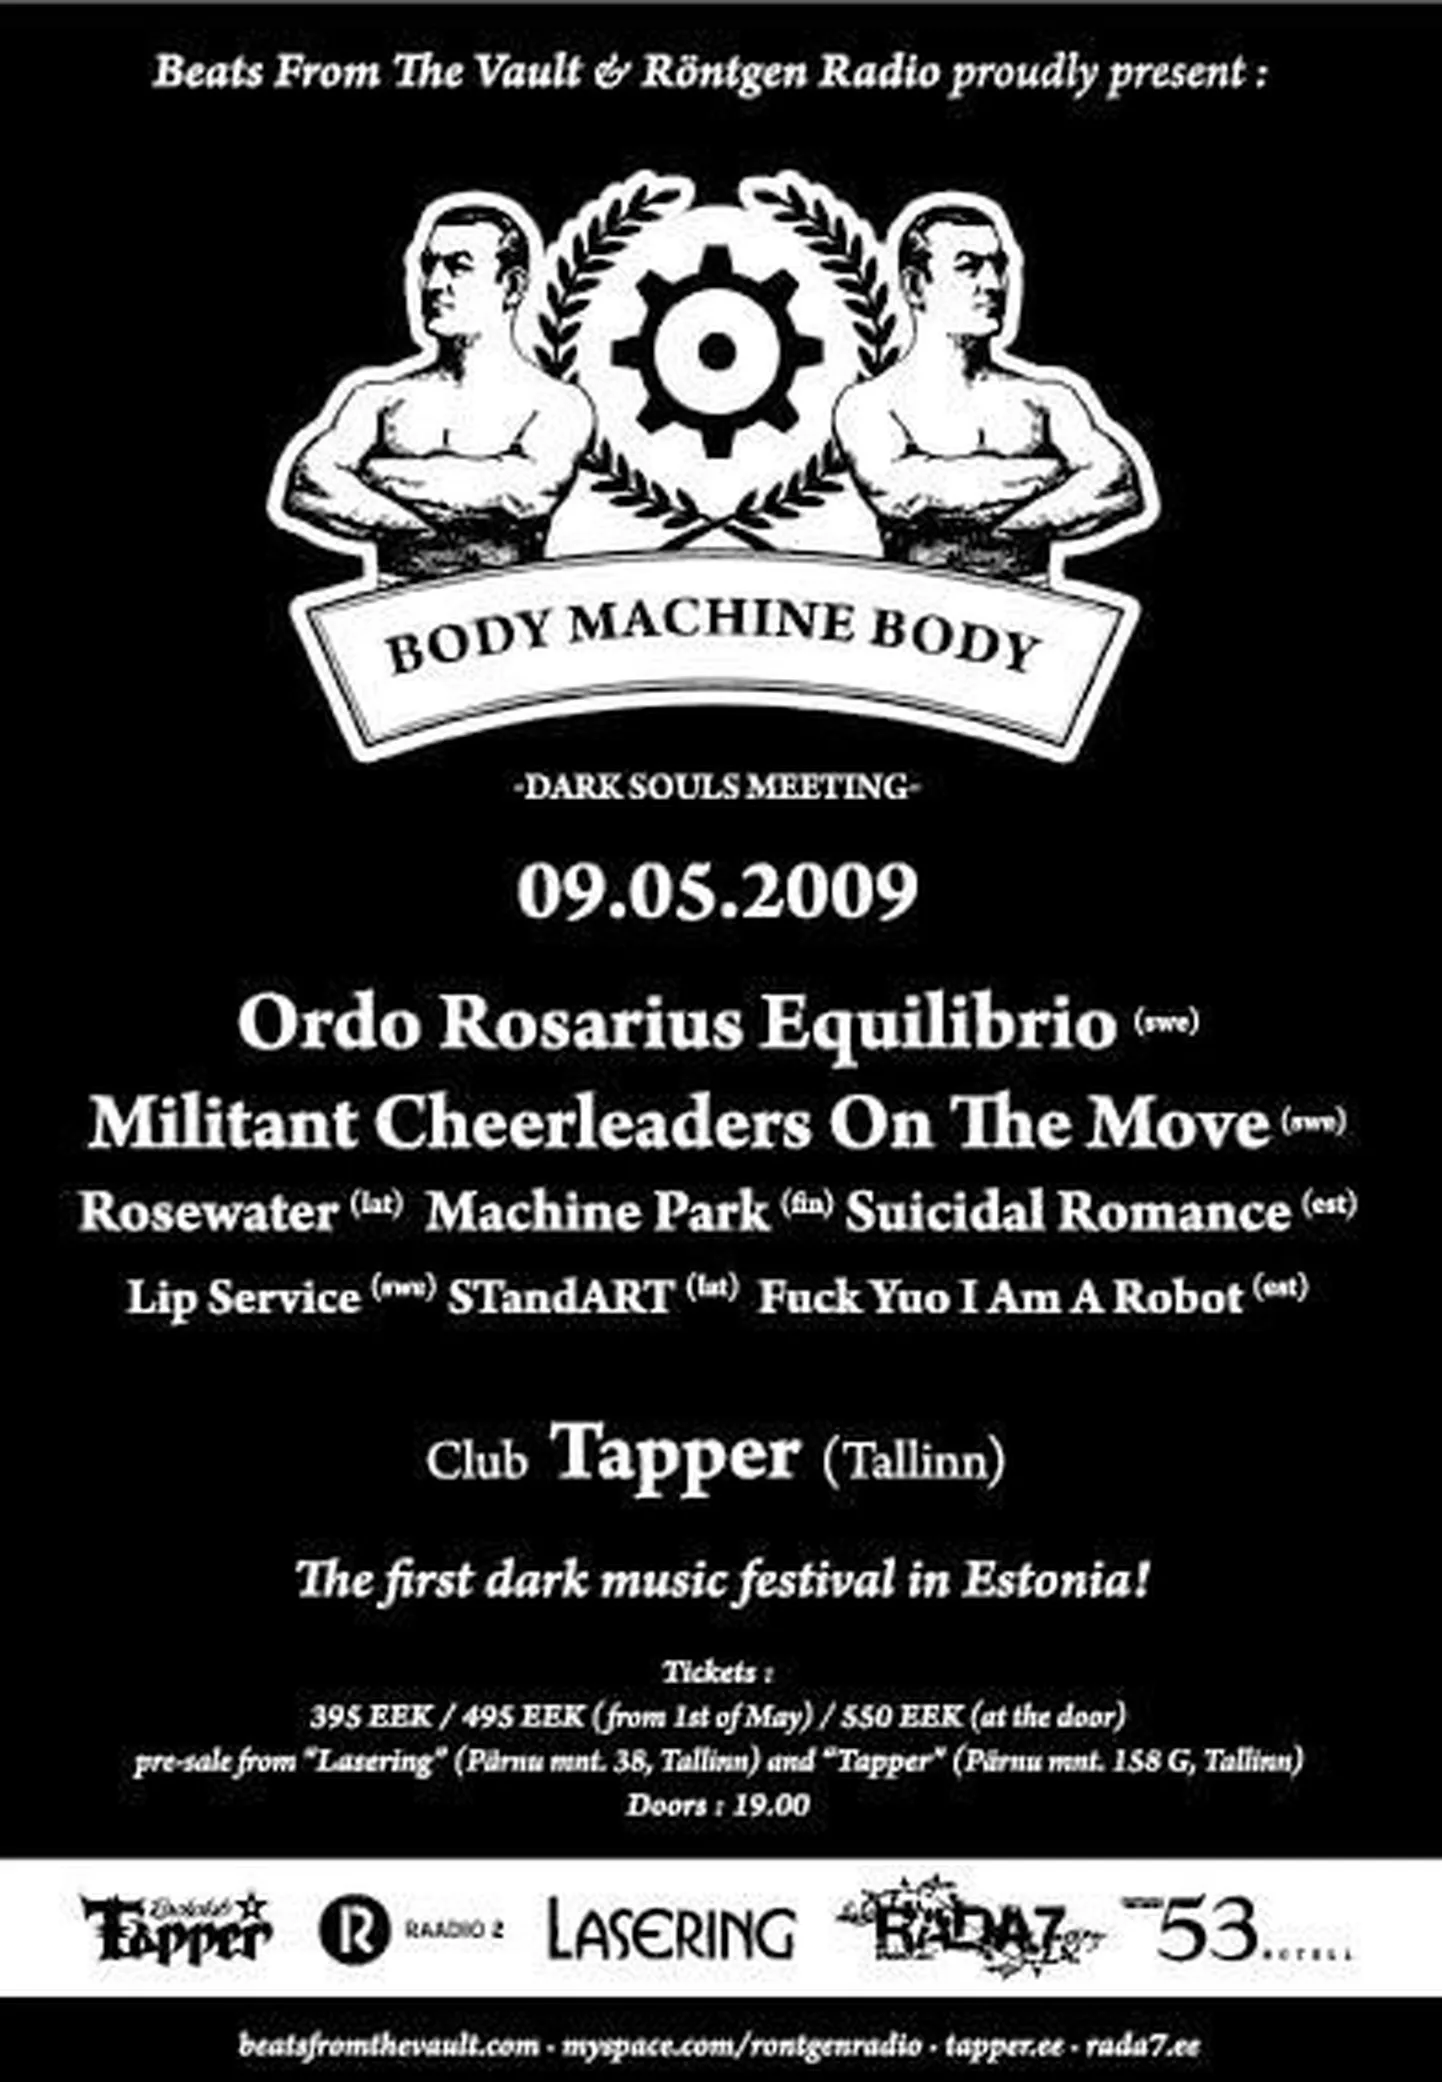 Sel laupäeval peetakse Tapperis Body Machine Body festivali